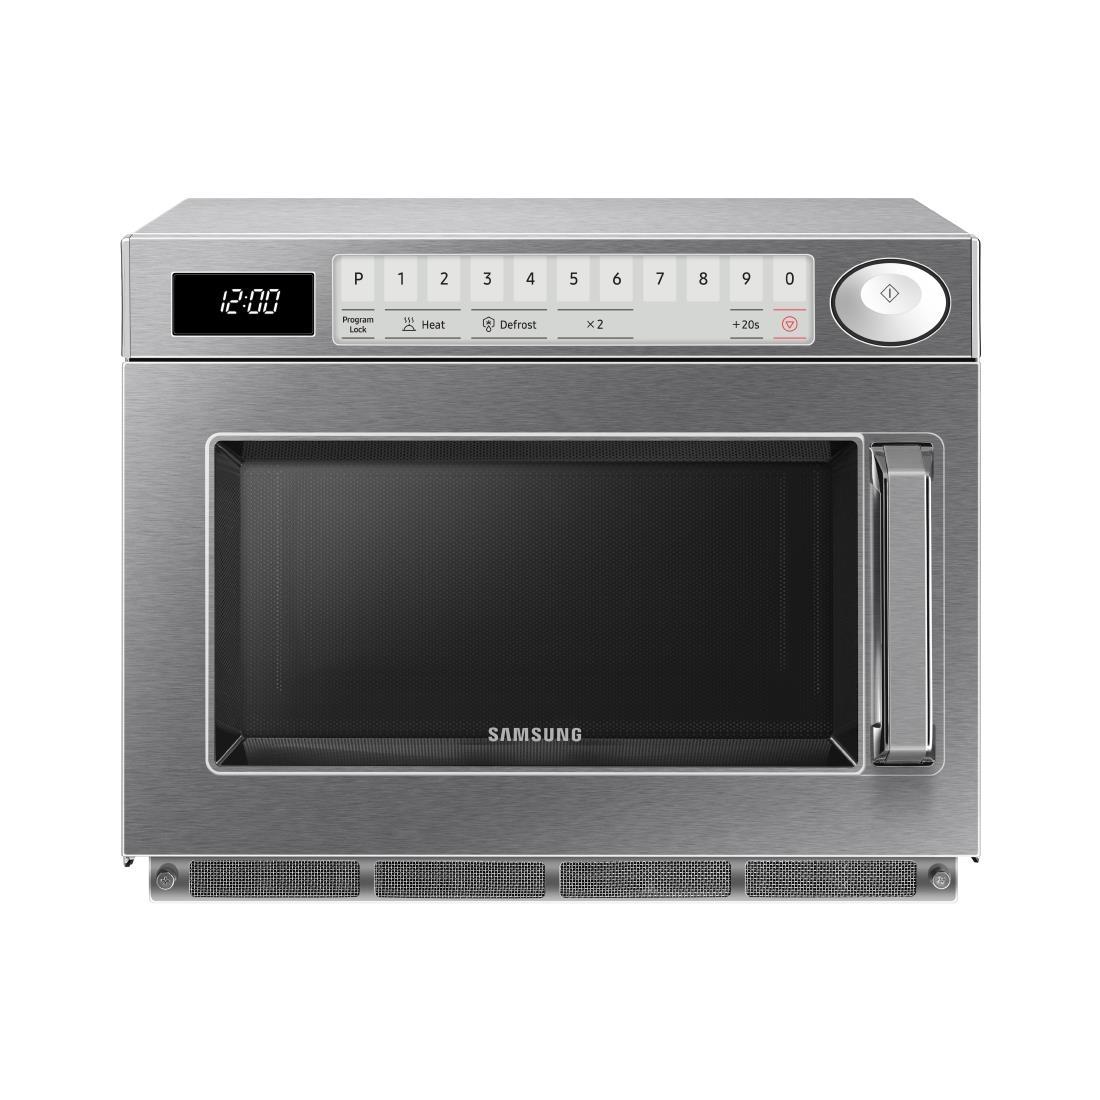 Samsung Commercial Microwave Digital 26Ltr 1000W - FS319  - 1